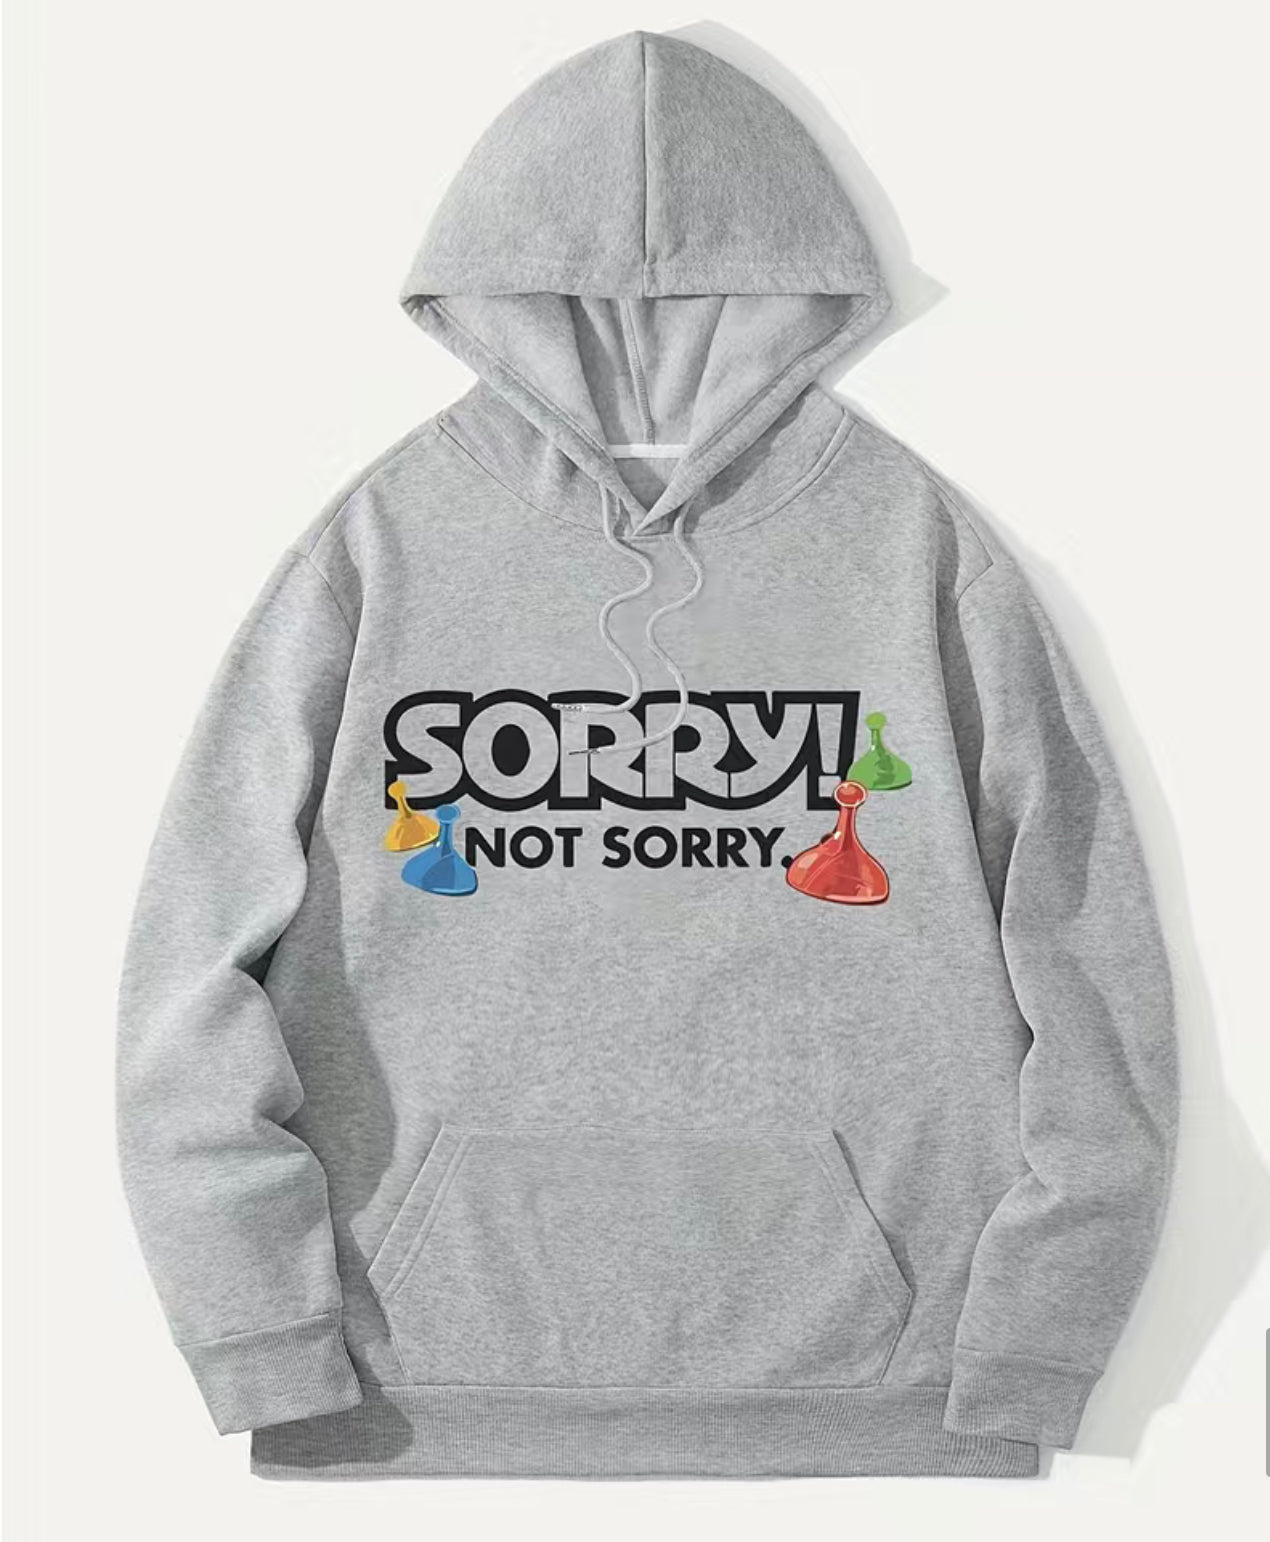 “Sorry Not Sorry” Sweatshirts